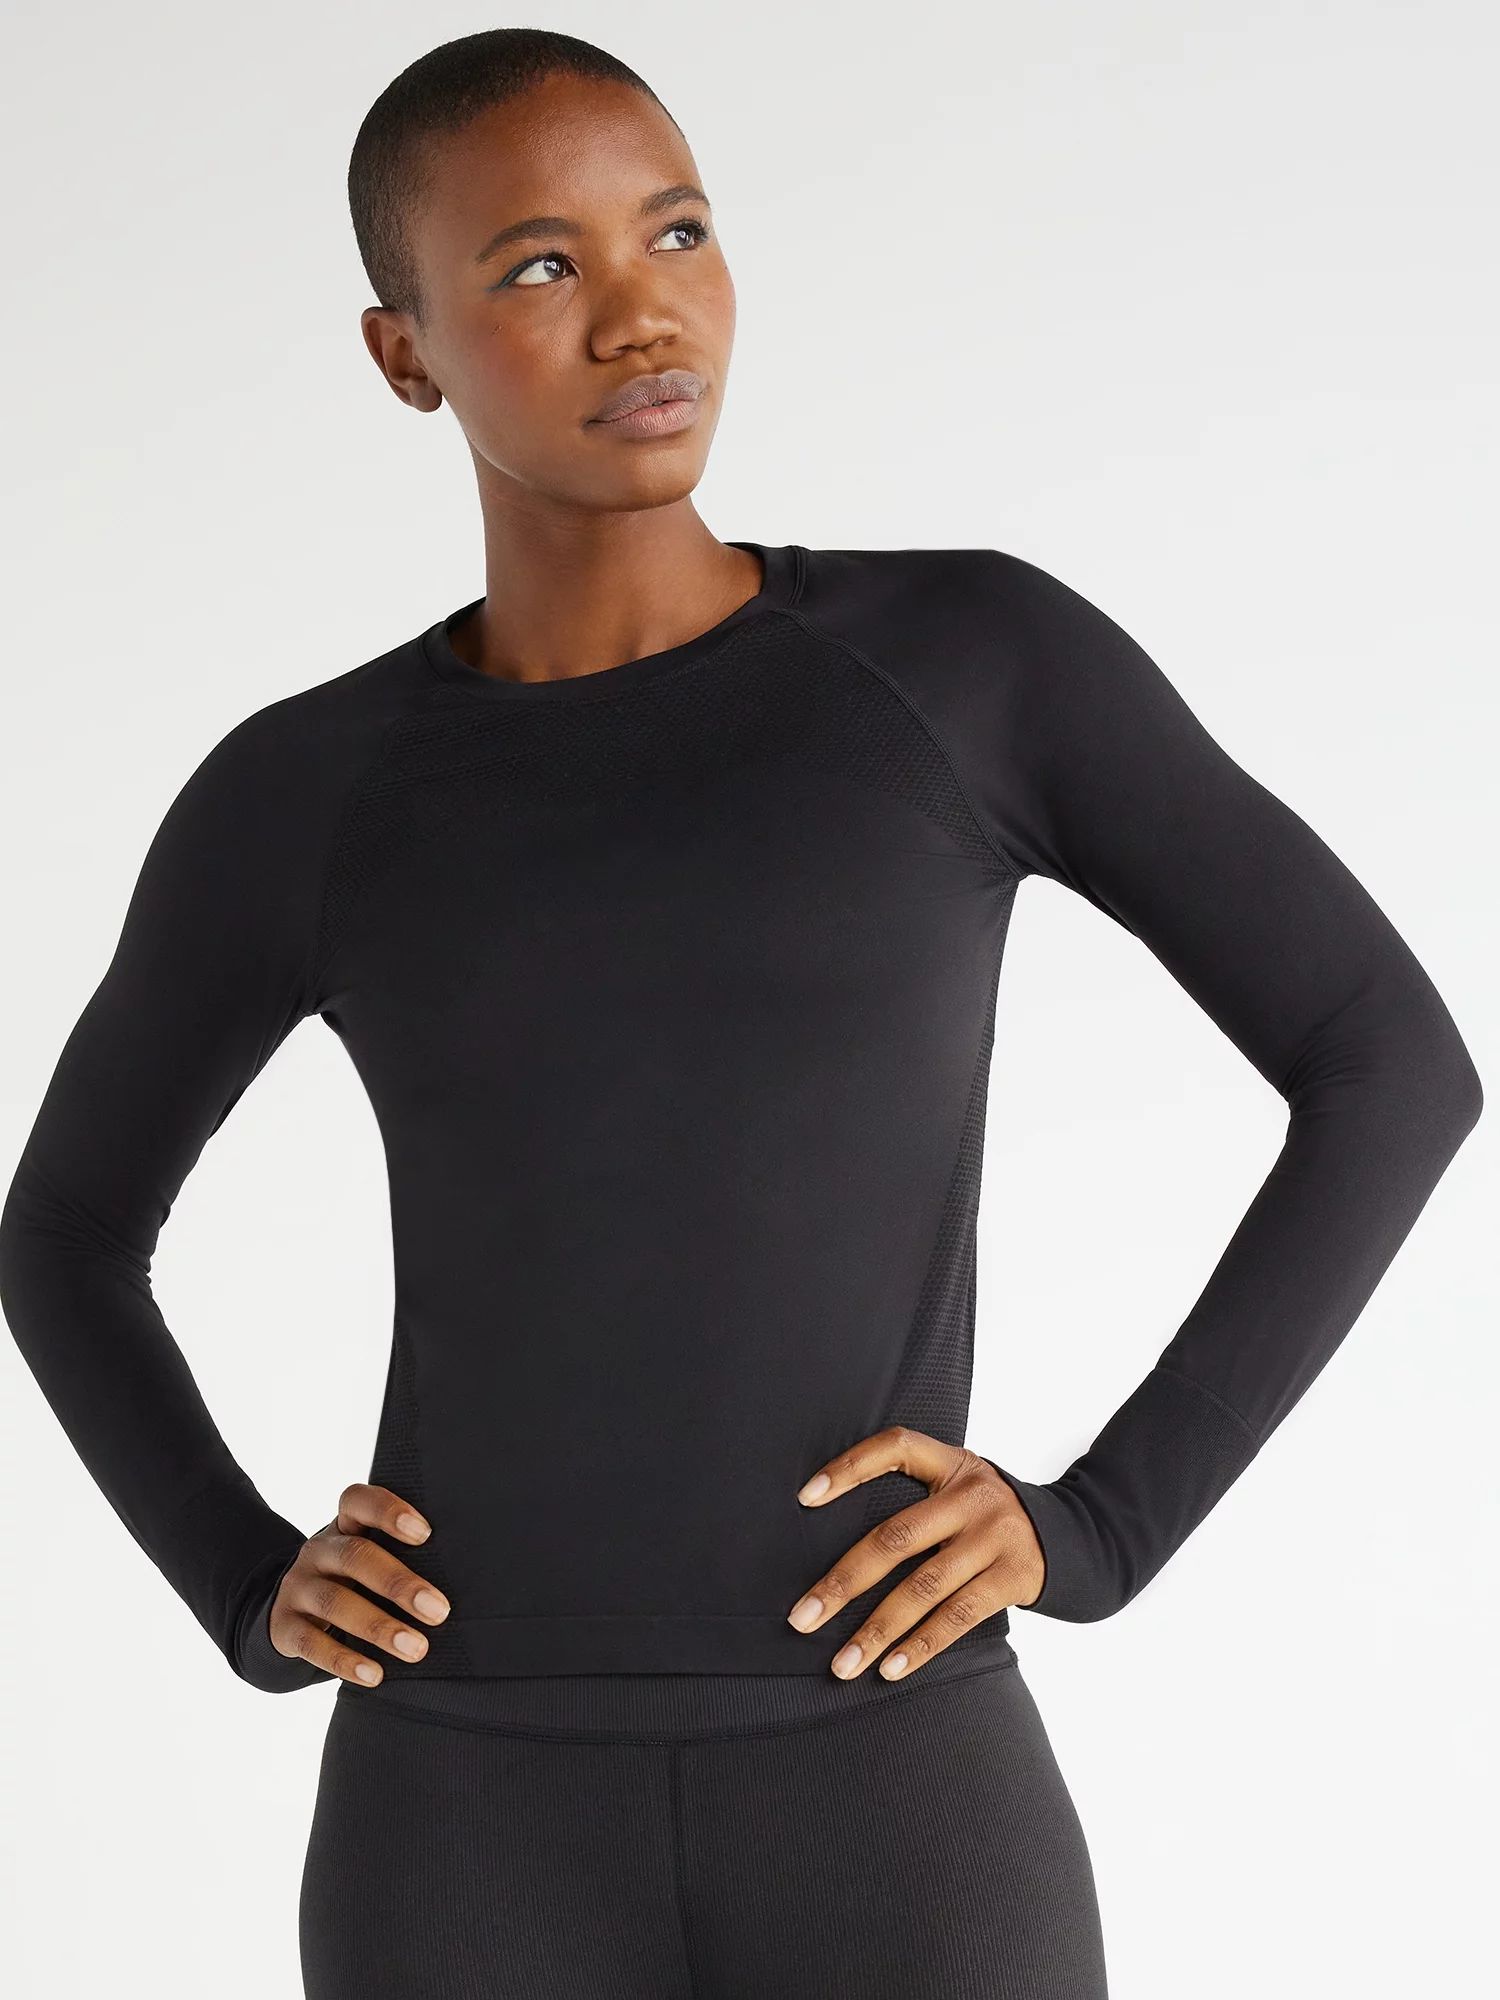 Love & Sports Women's Seamless Sports Shirt with Long Sleeves, Sizes XS-XXL | Walmart (US)